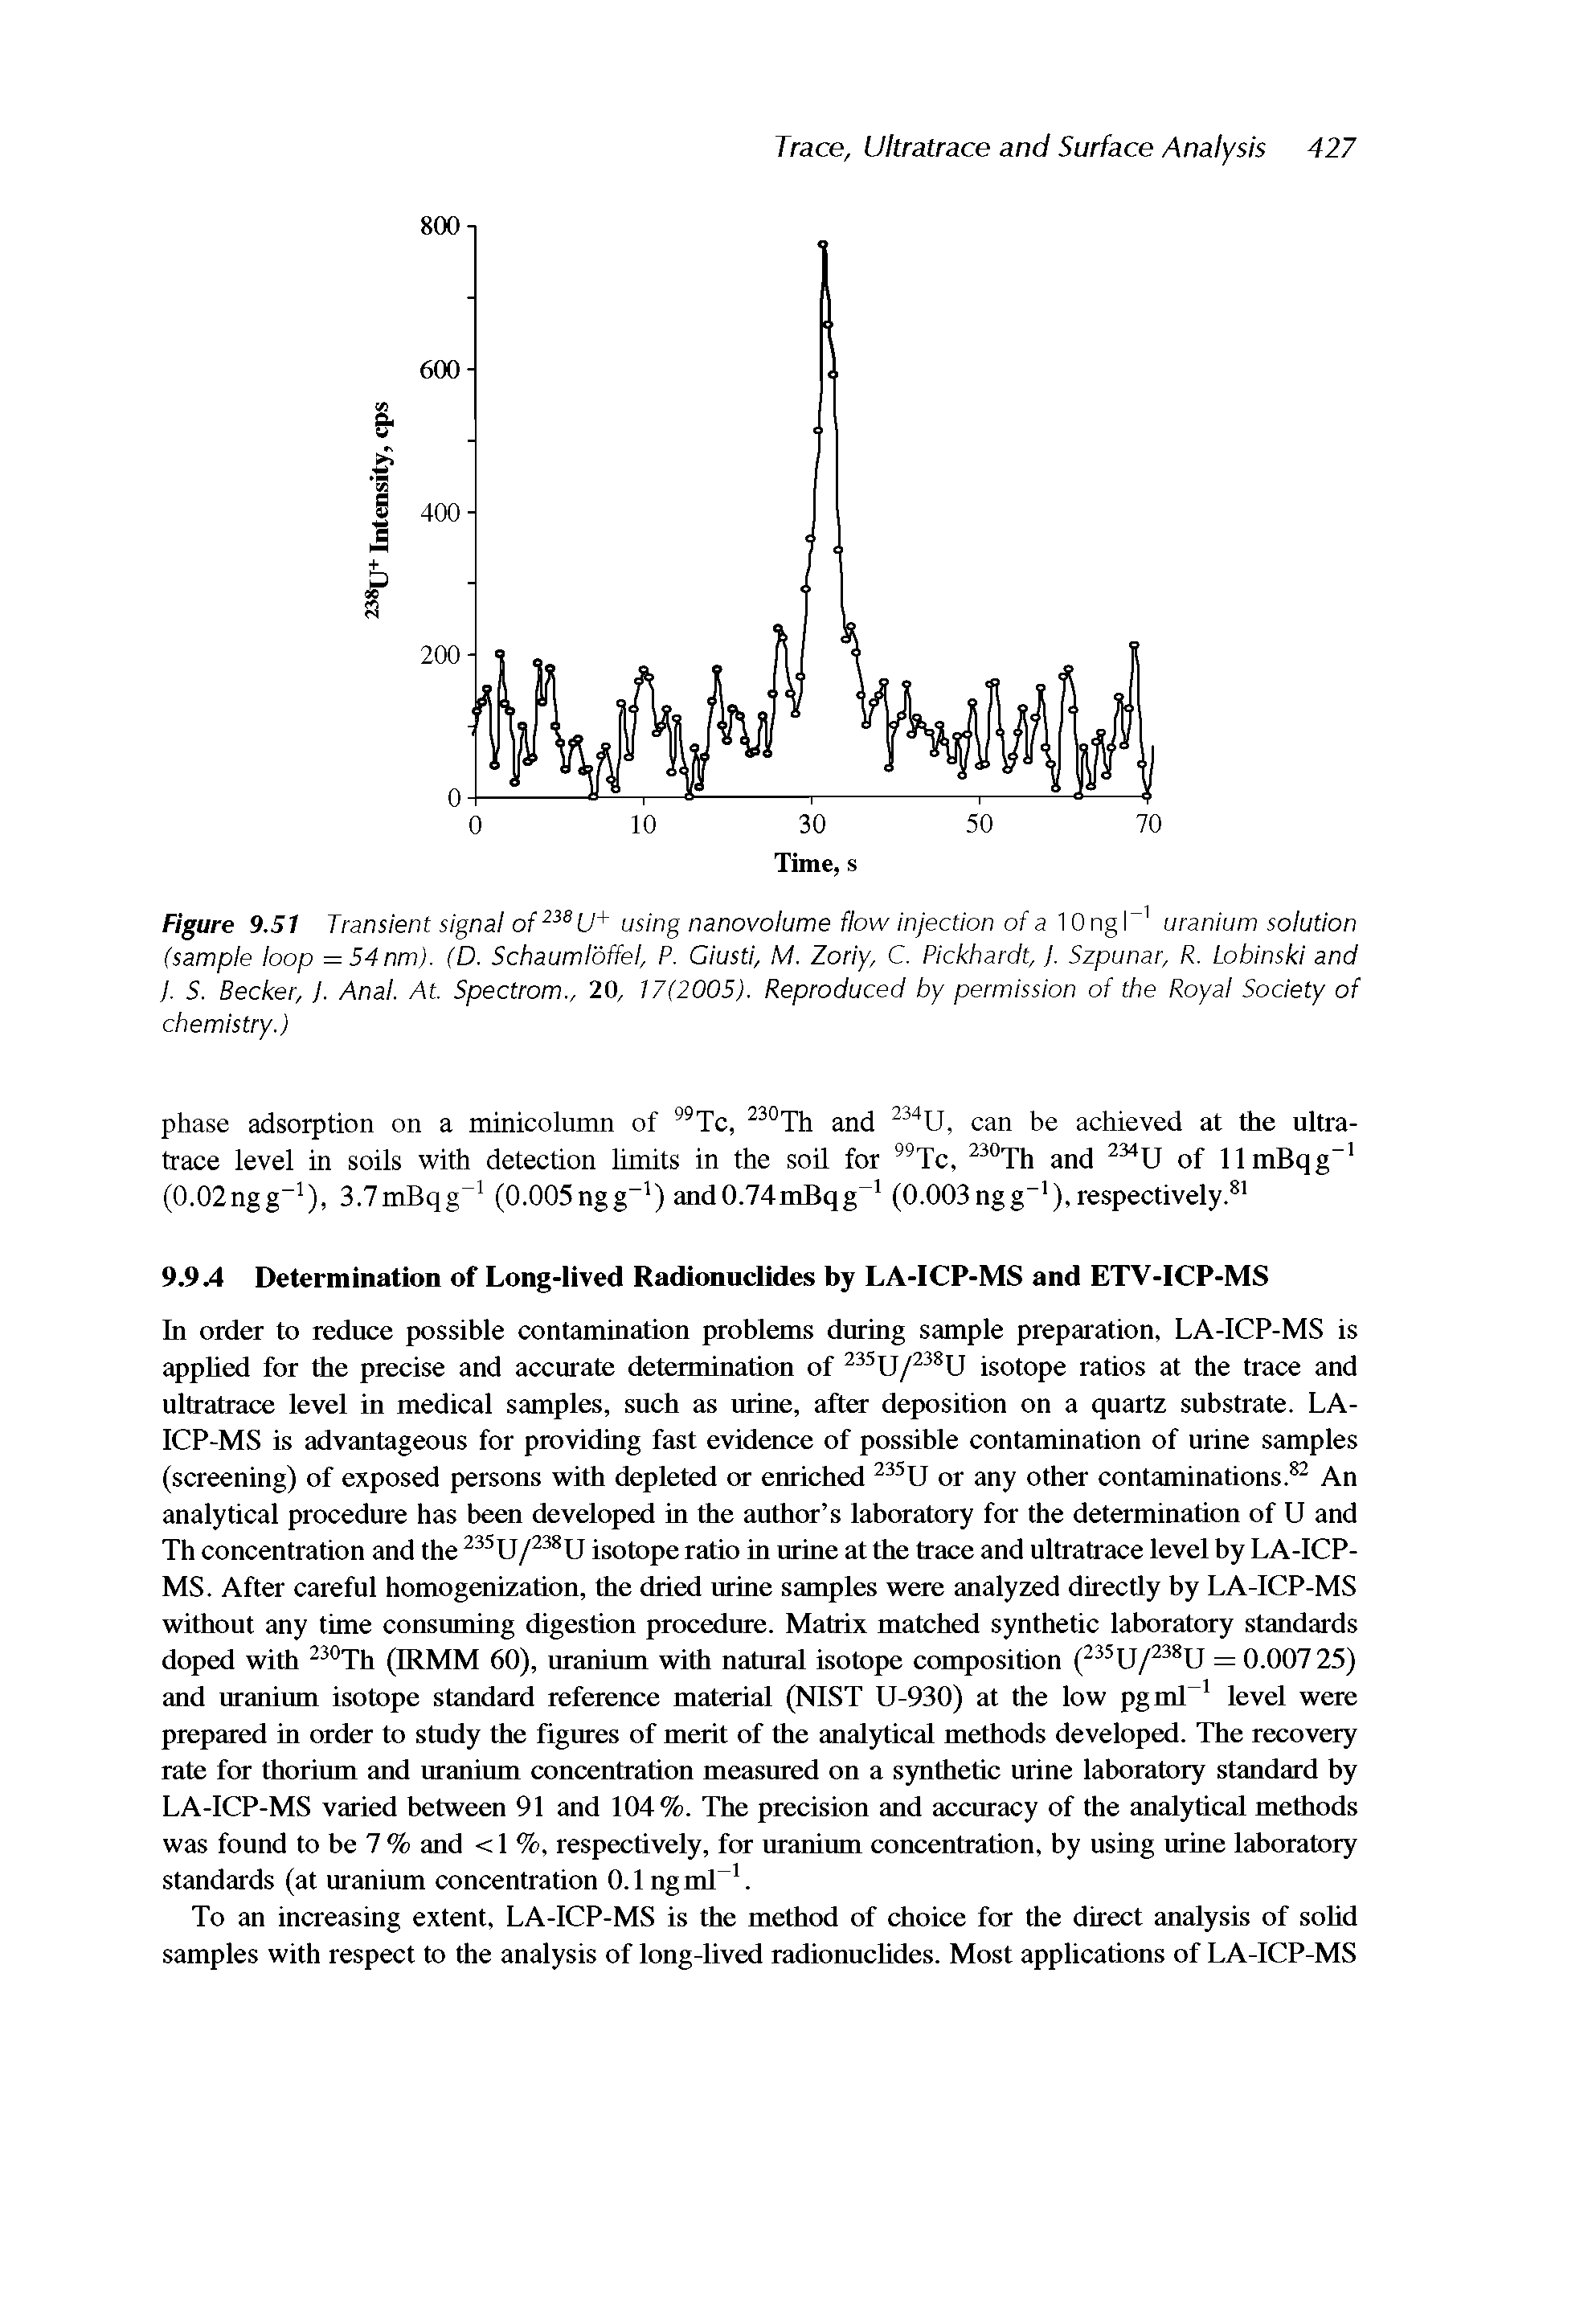 Figure 9.51 Transient signal using nanovolume flow injection of a lOngP uranium solution...